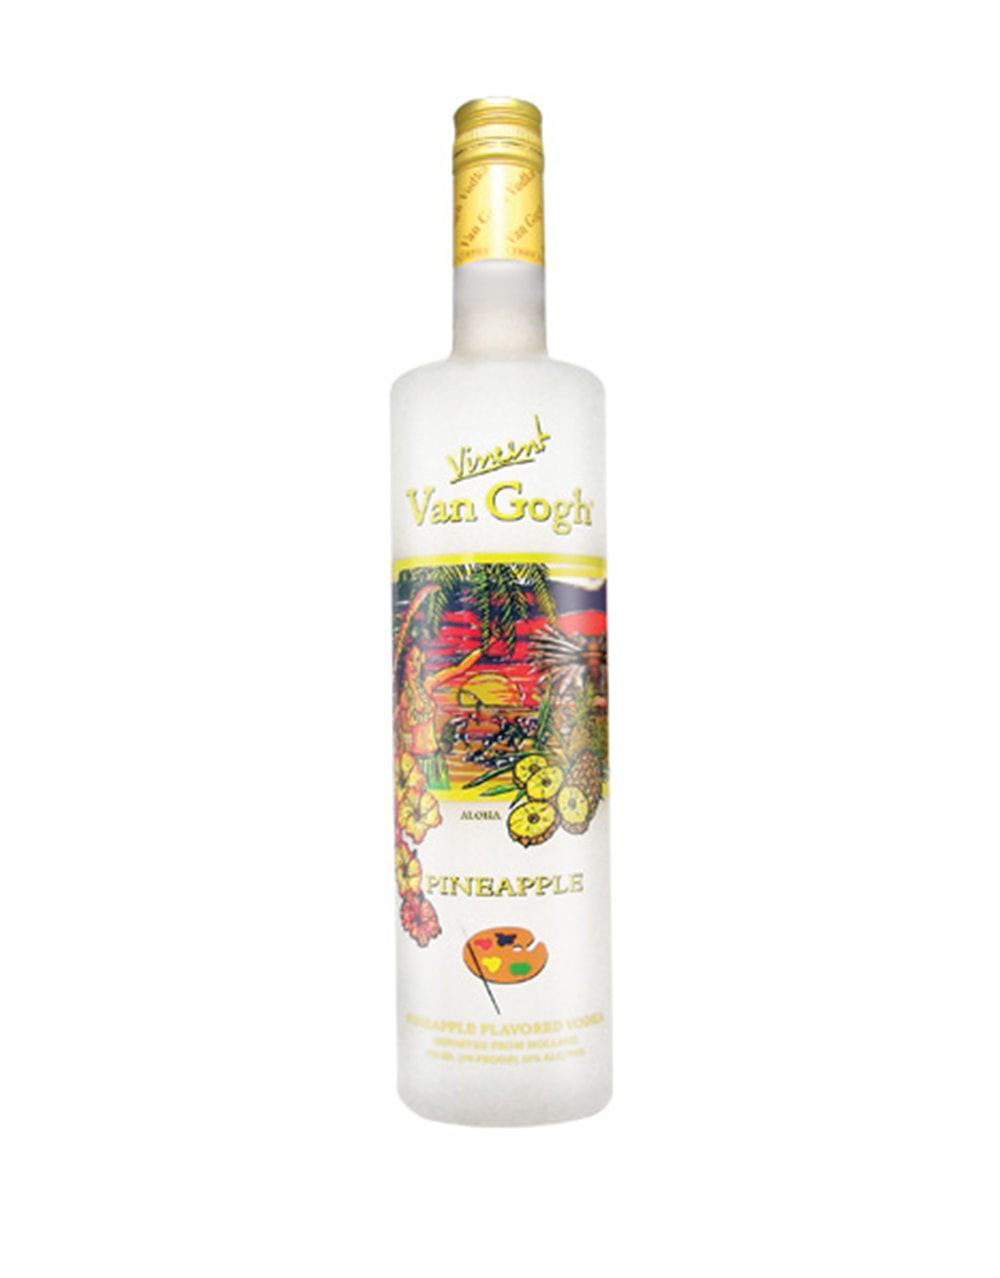 Van Gogh Pineapple Vodka